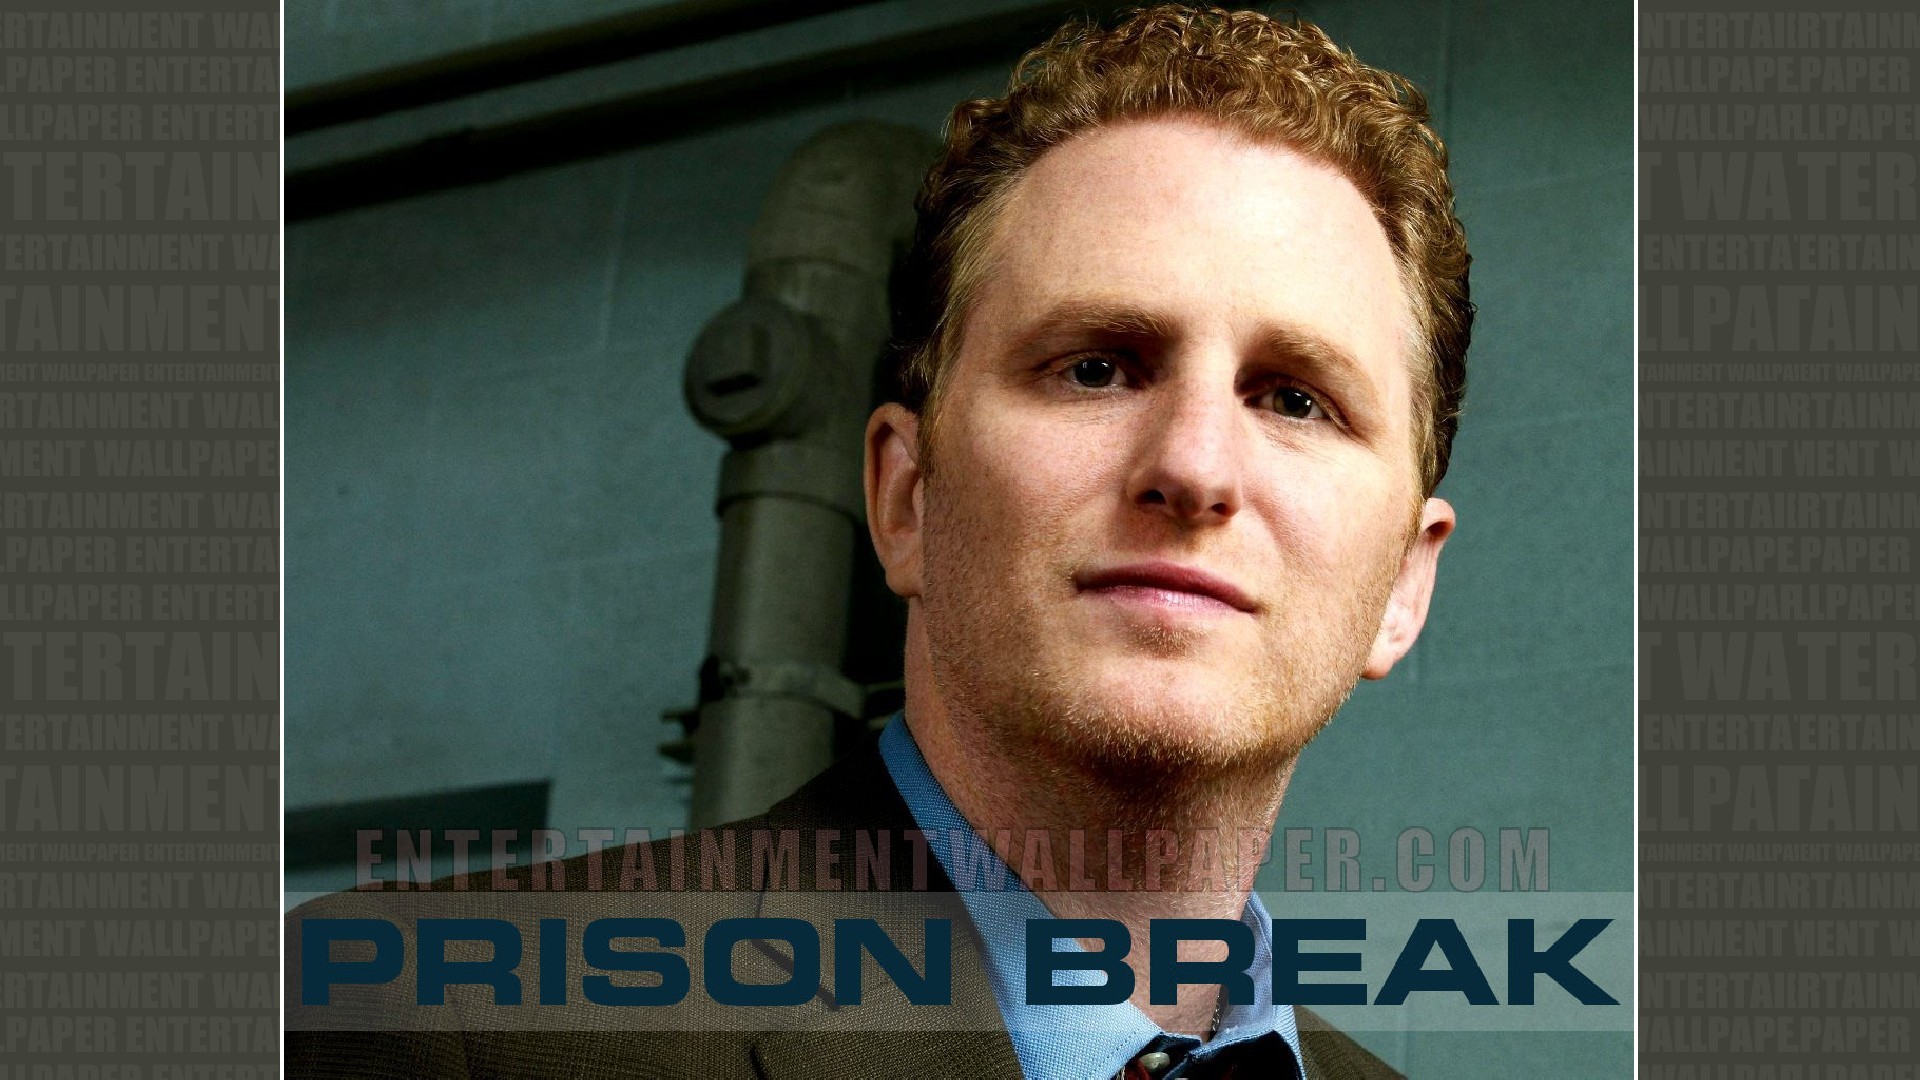 1920x1080 Prison Break Wallpaper - Original size, download now.